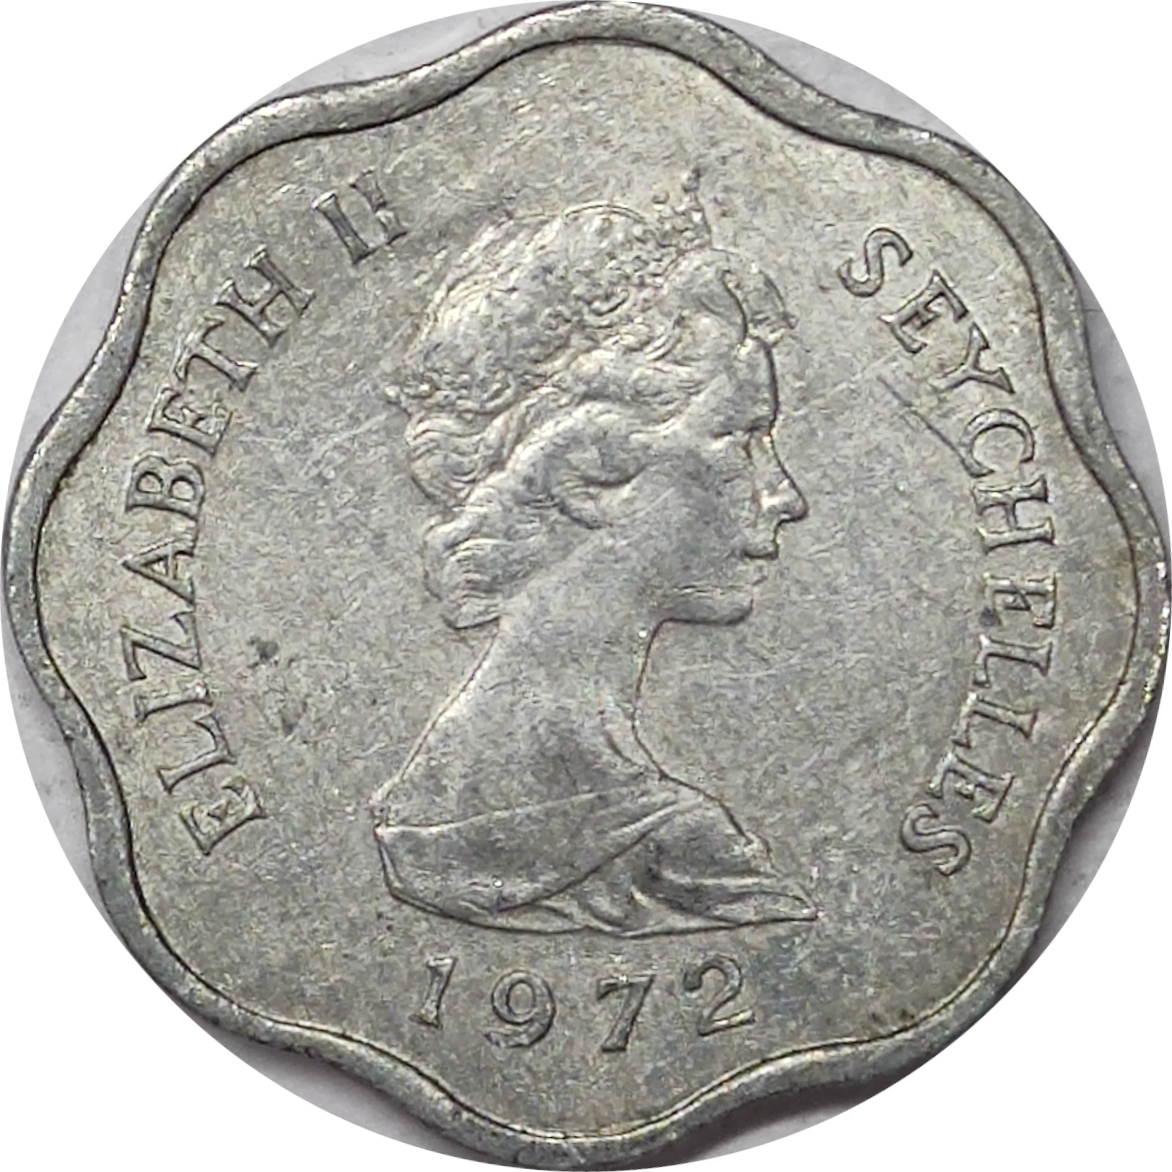 5 cents - Elizabeth II - Fleur